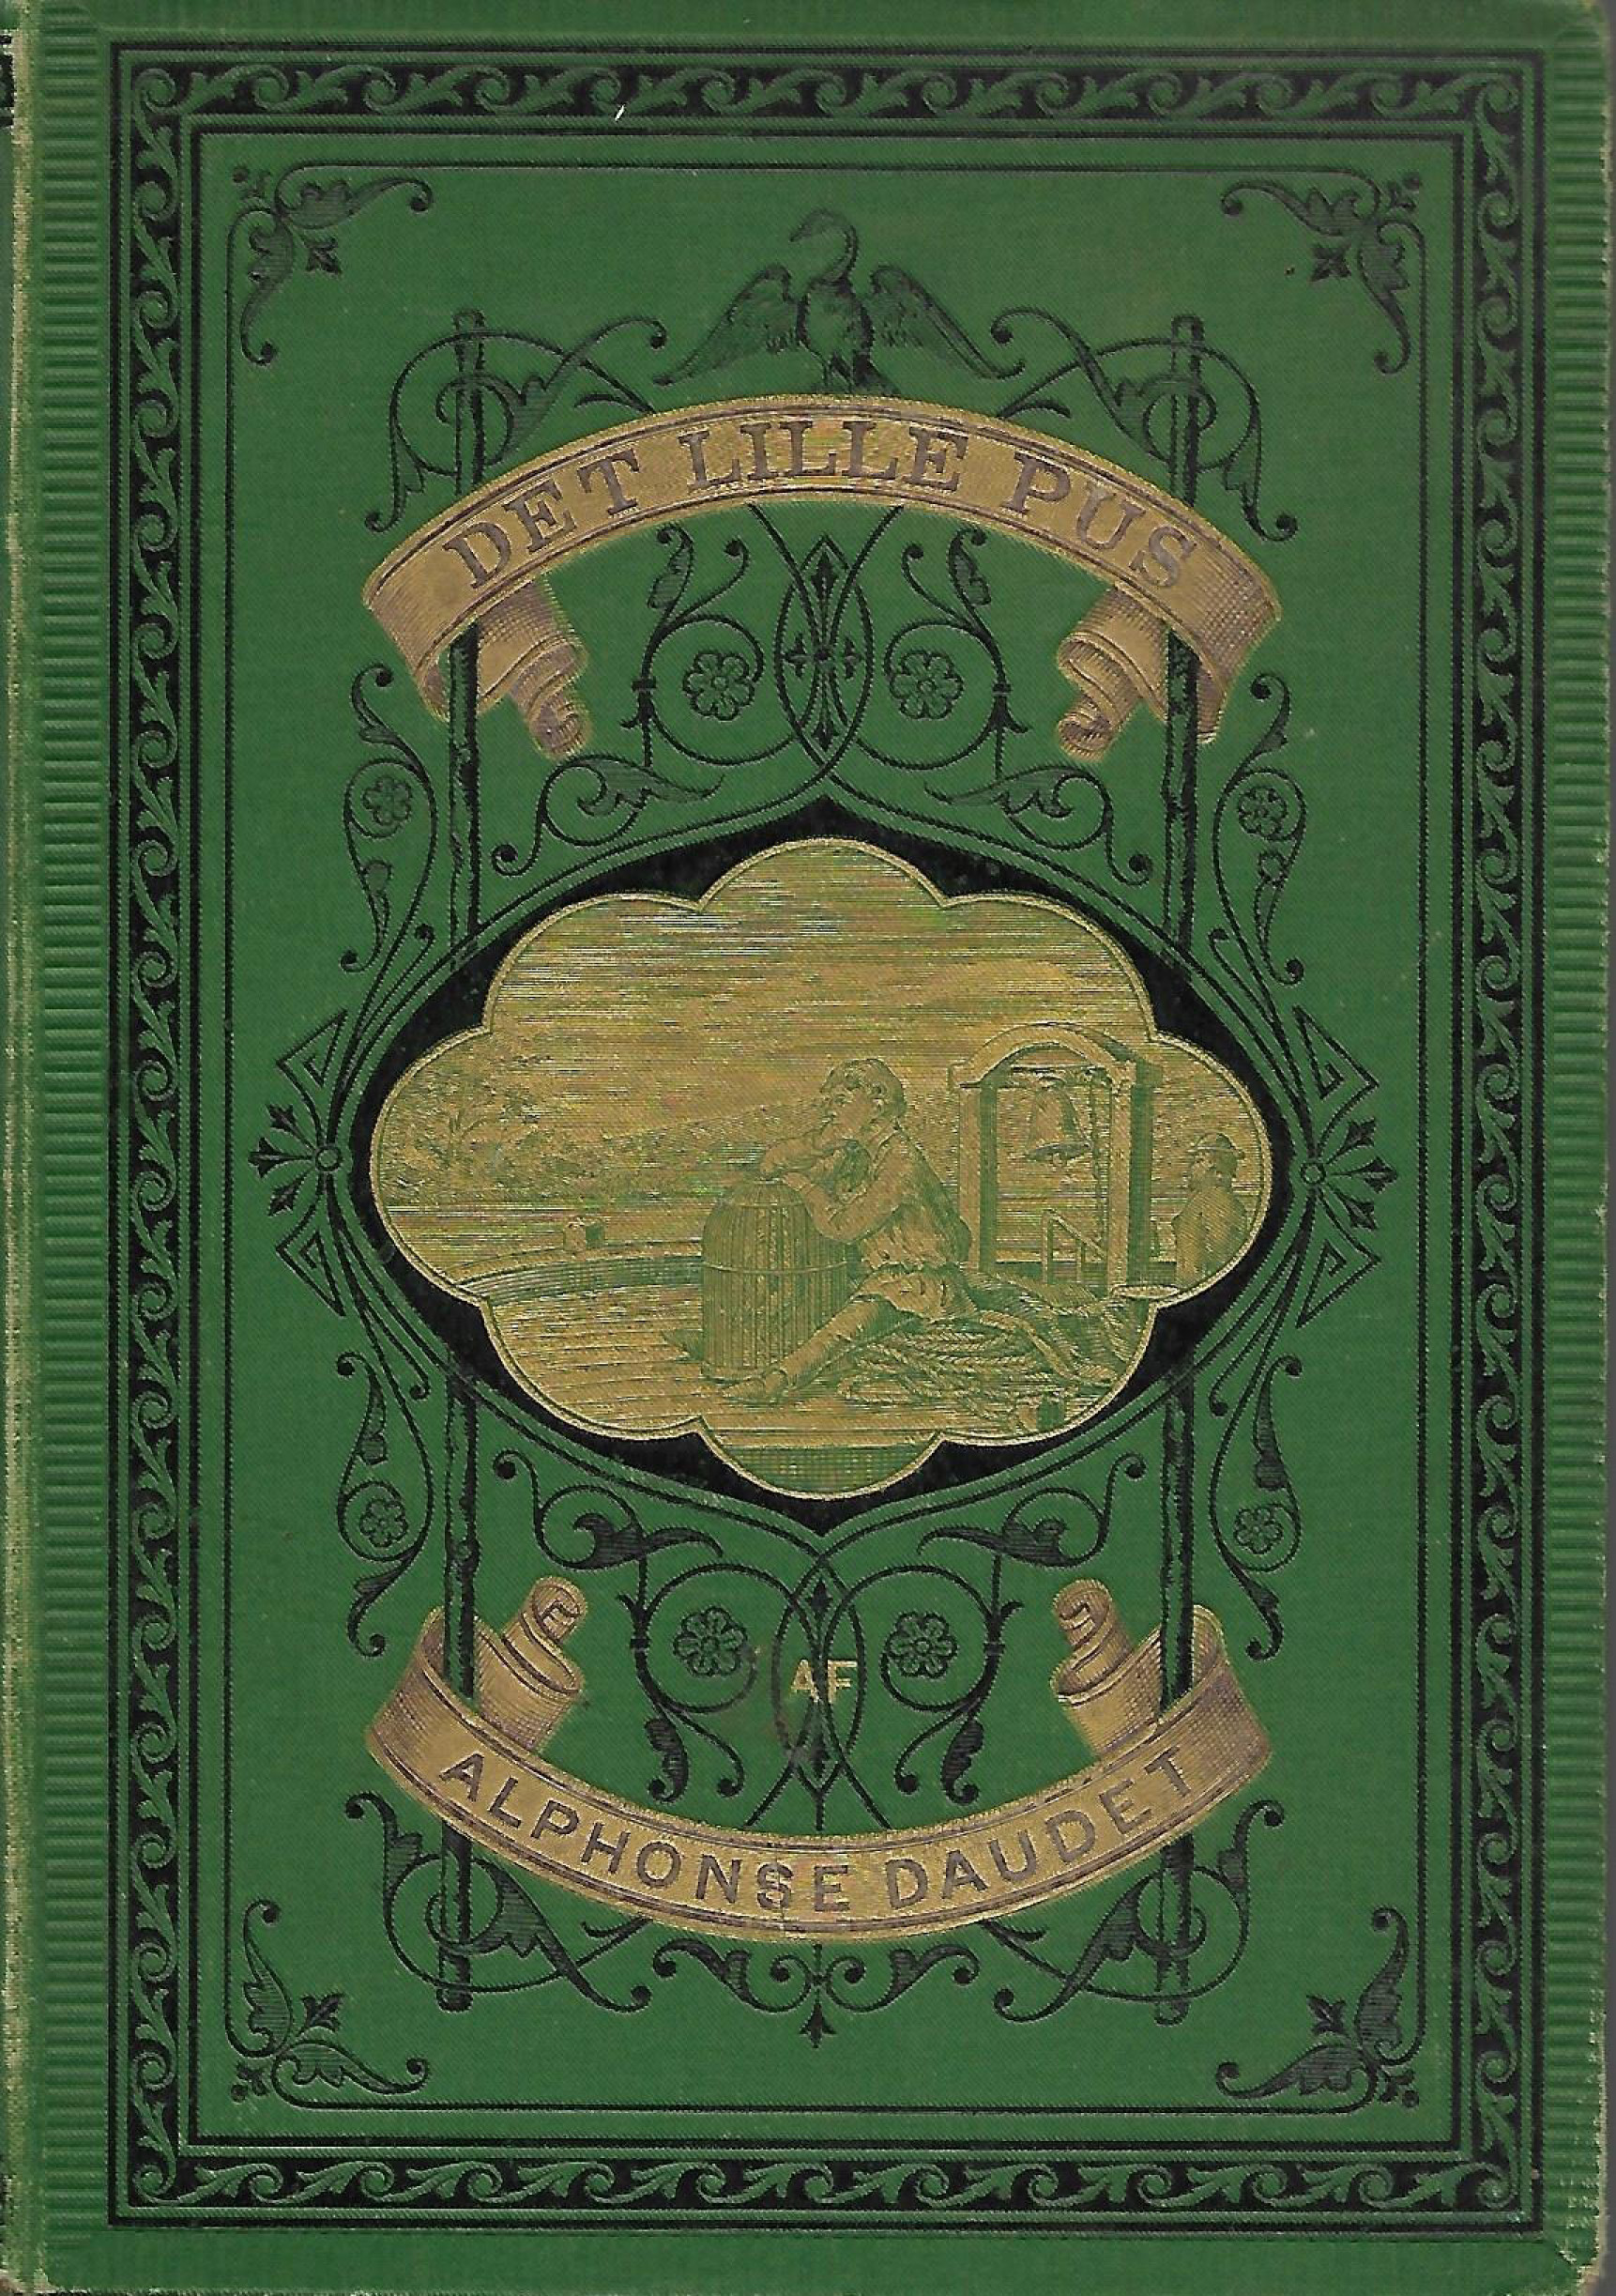 Det lille Pus - Alphonse Daudet - 1879-1